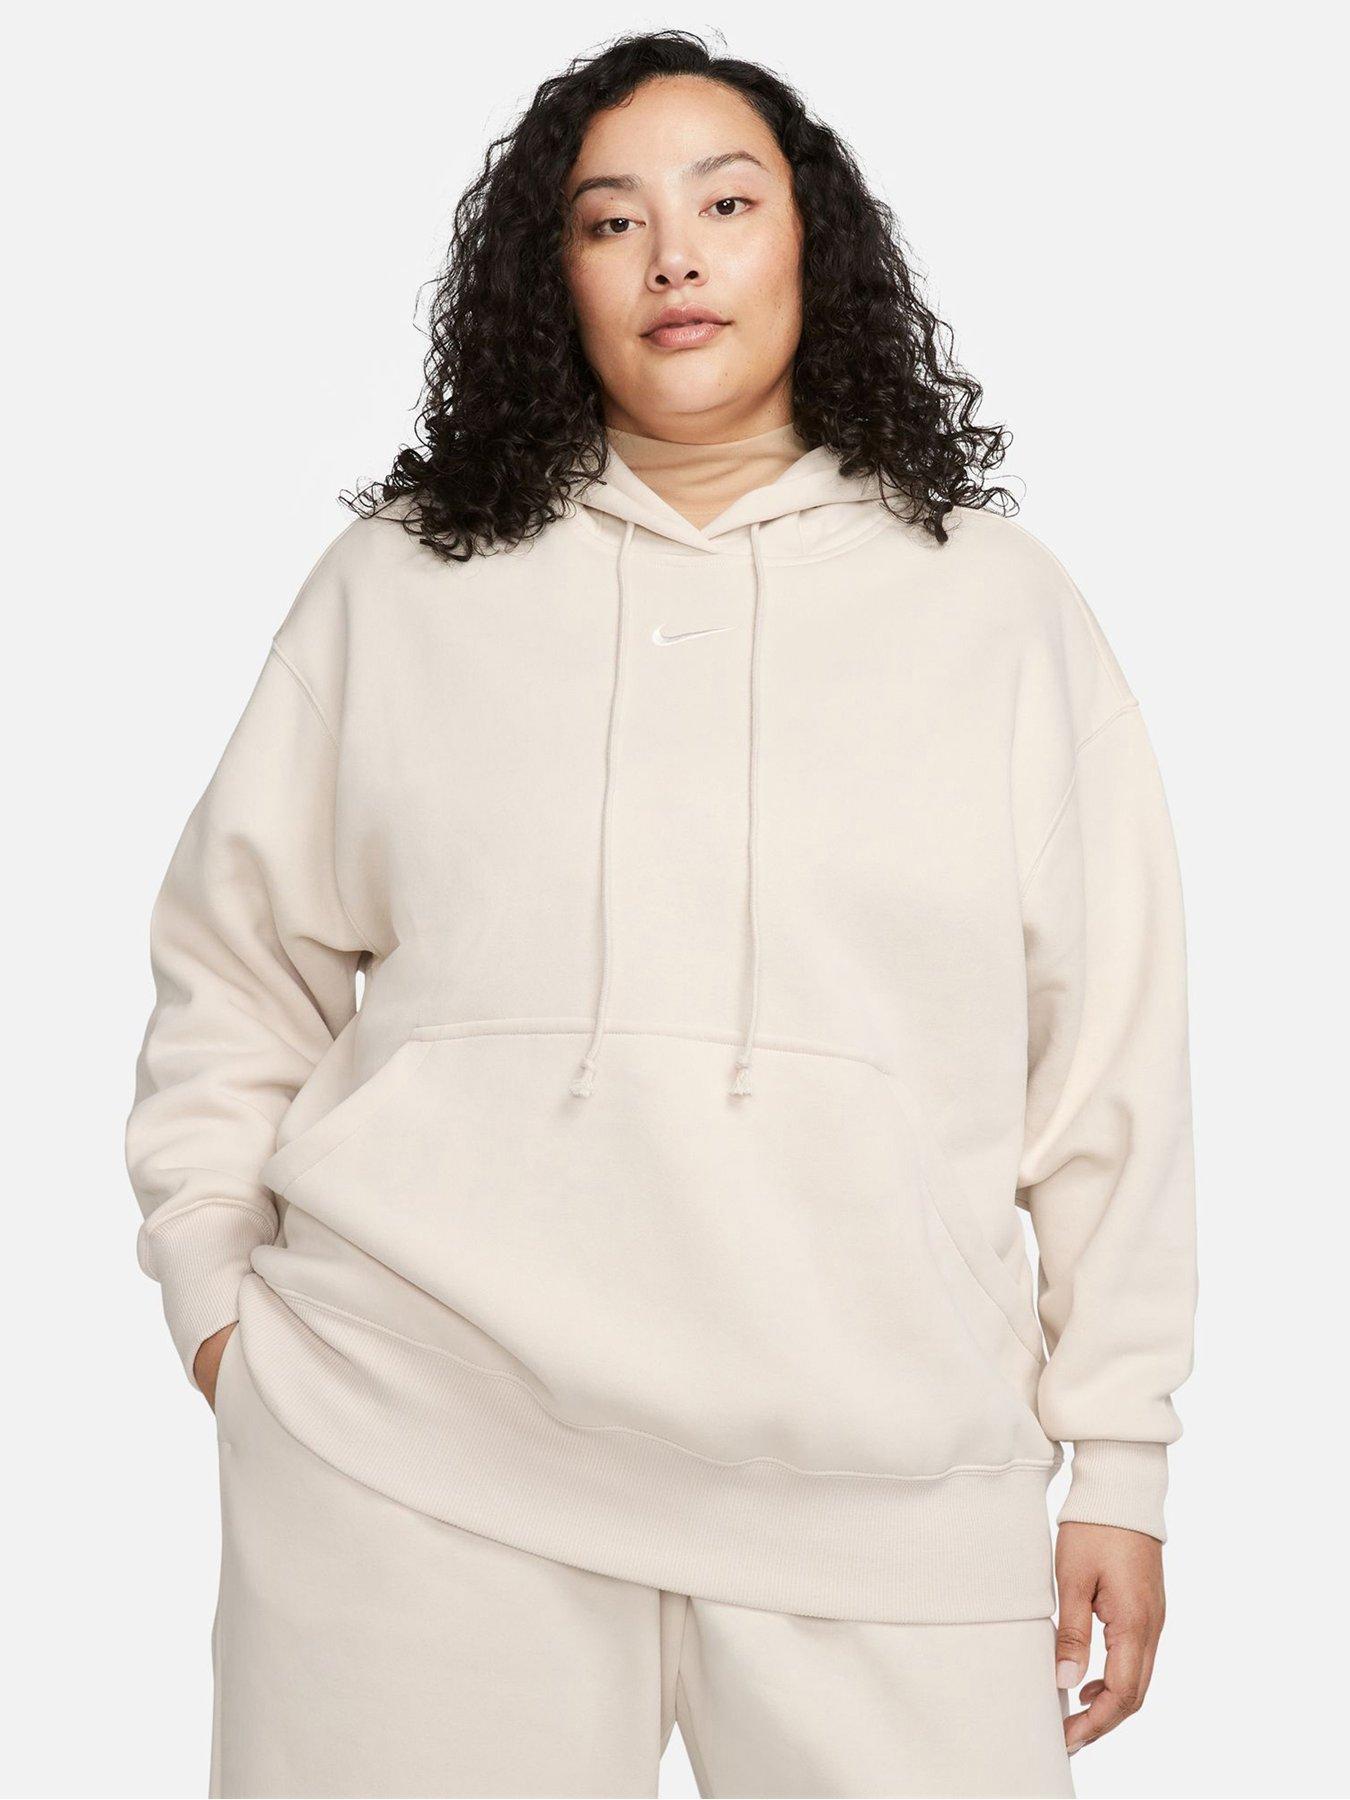 Women's Hooded Pullover, Leisure Hoodie, Sweatshirt, Oversize